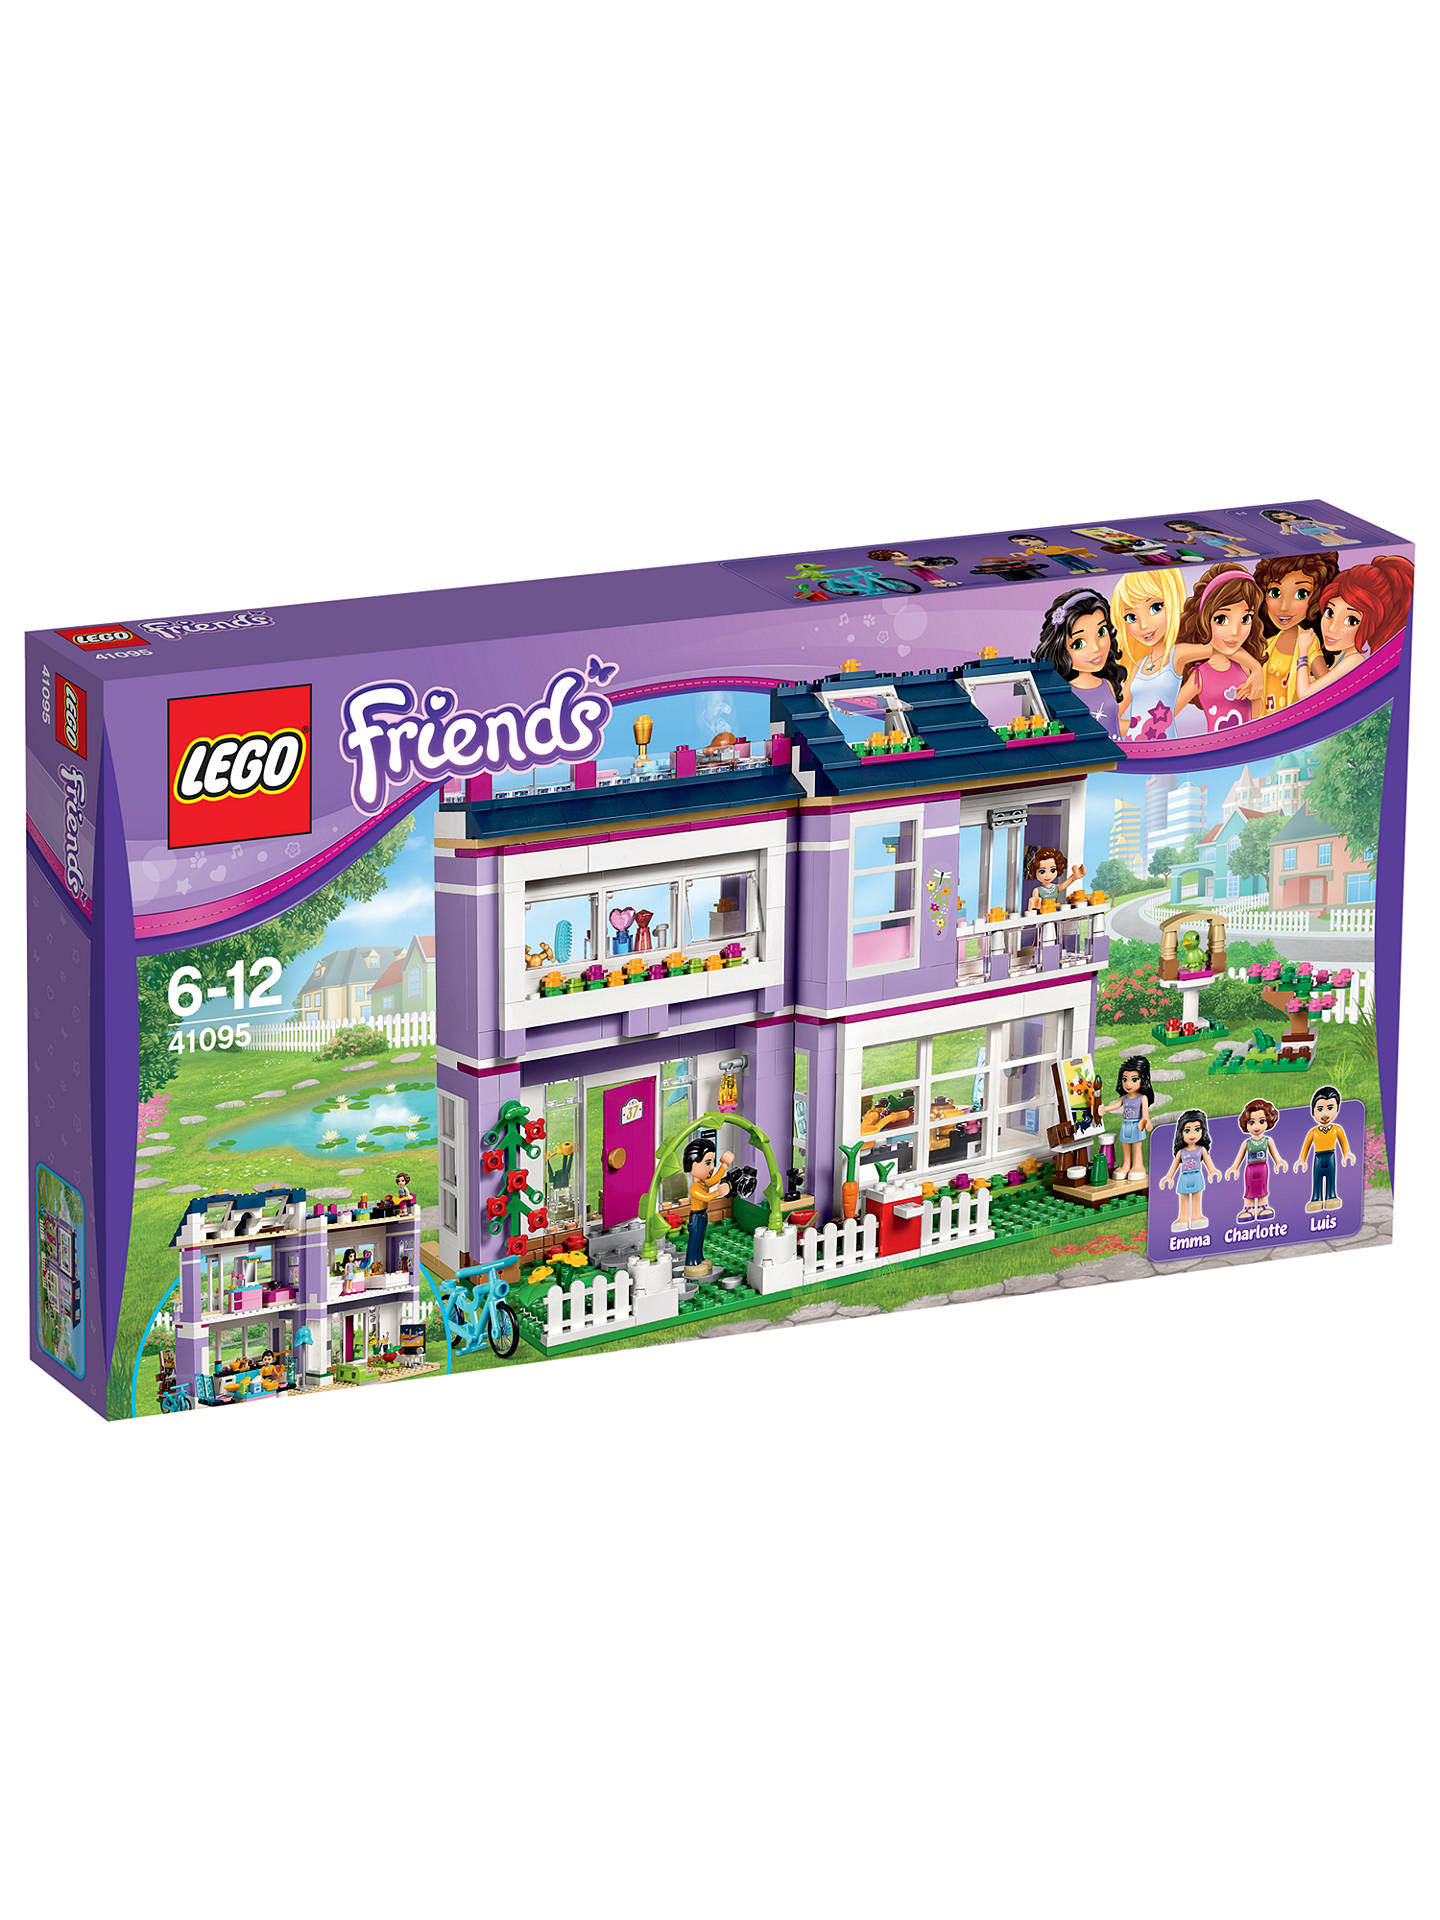 LEGO Friends 41095 Emma's House at John Lewis & Partners